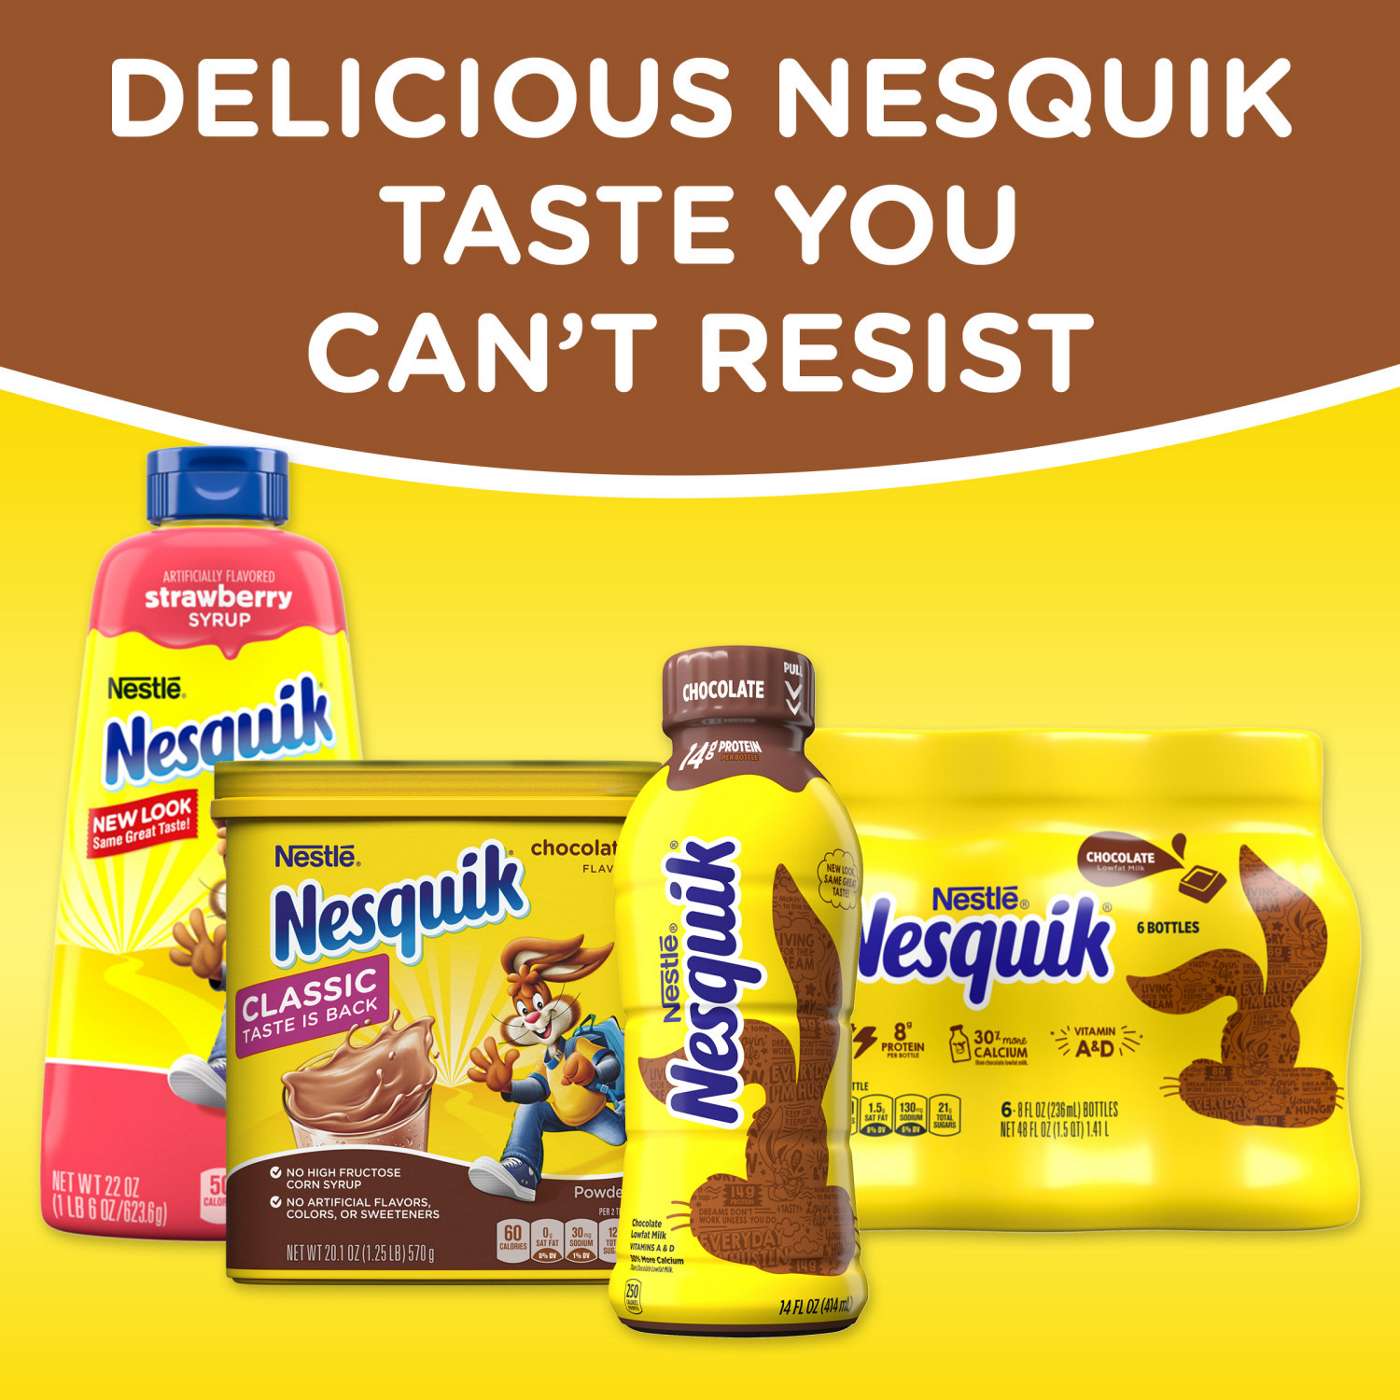 Nestle Nesquik Chocolate Syrup; image 6 of 8